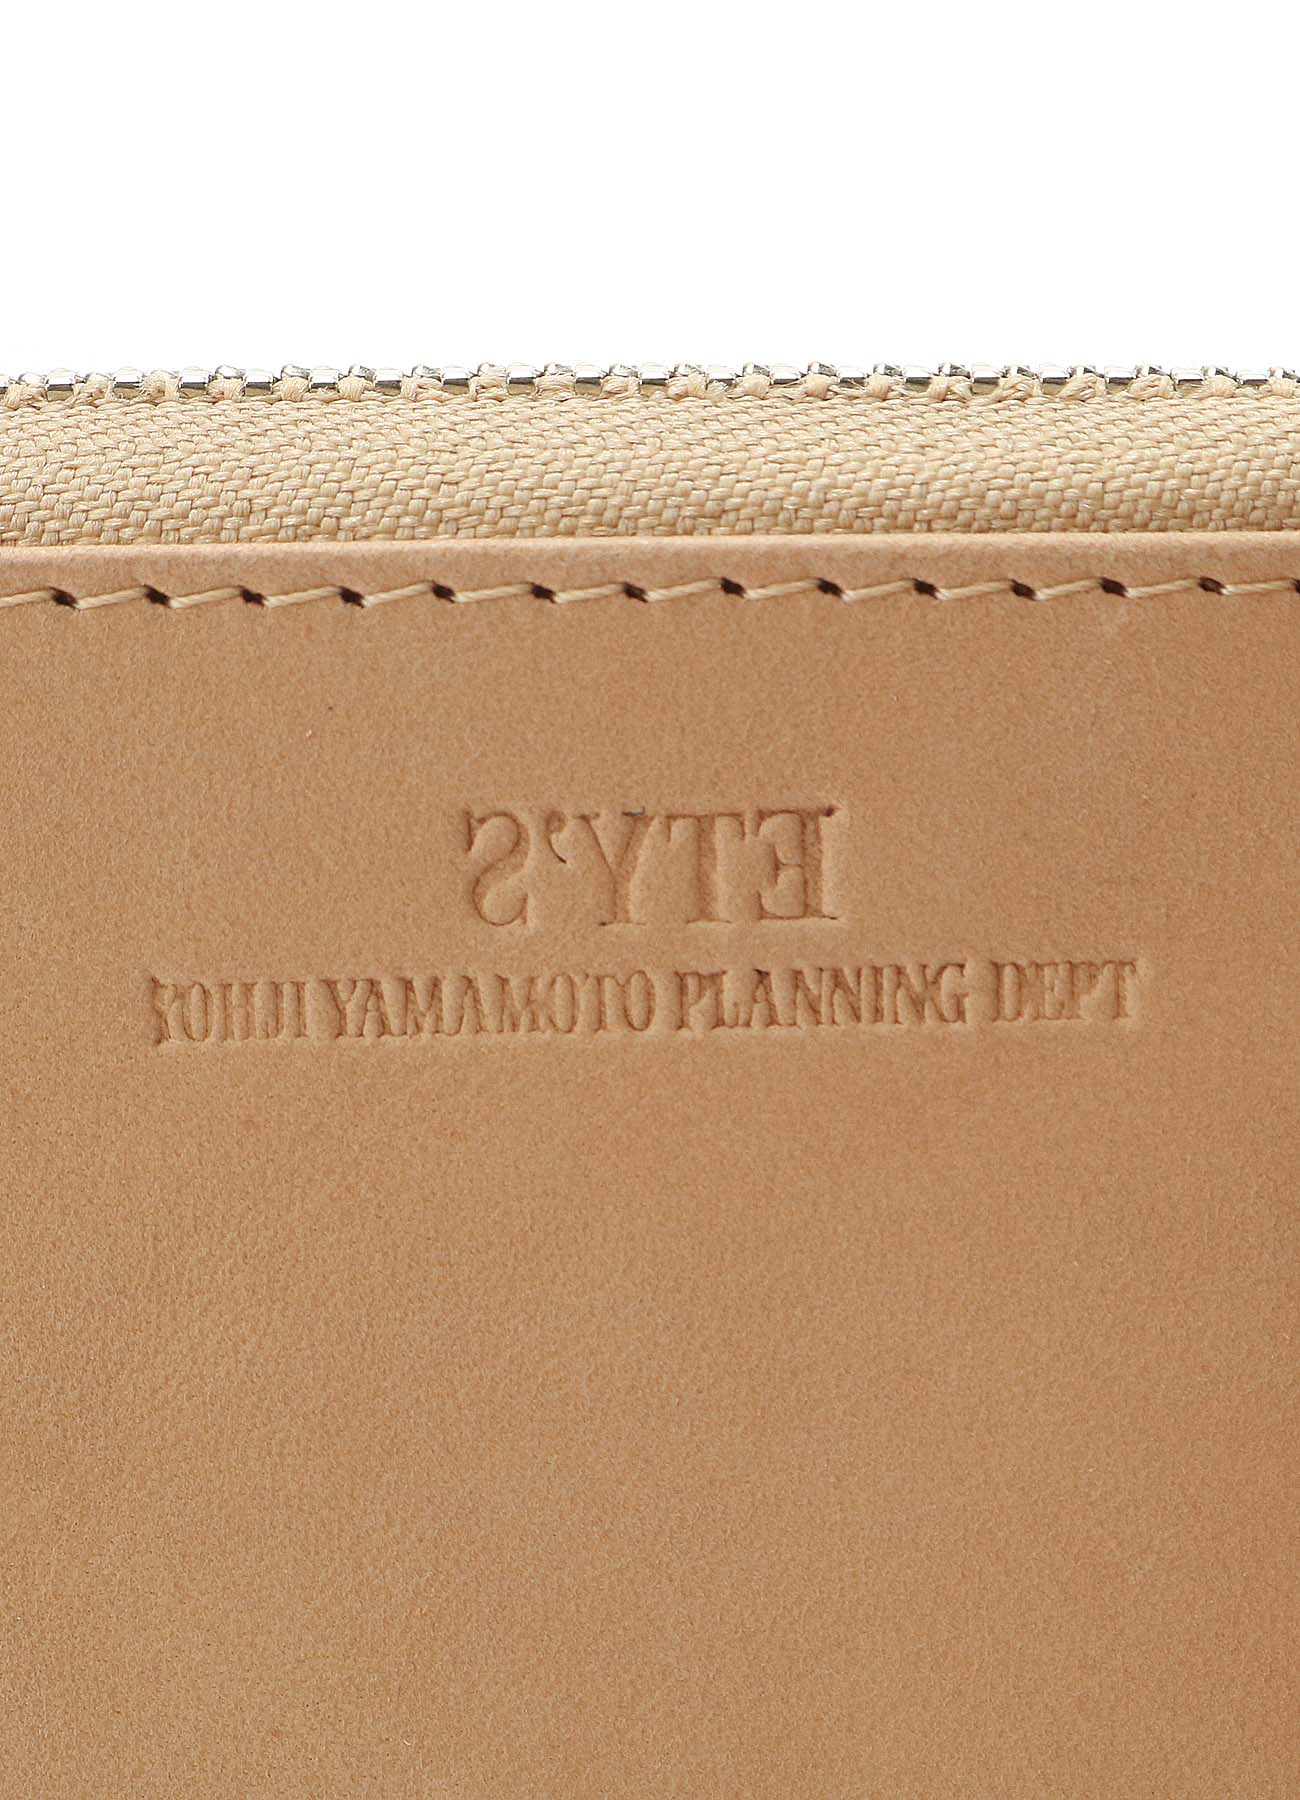 Cow Leather 2WAY Detachable Mini Wallet